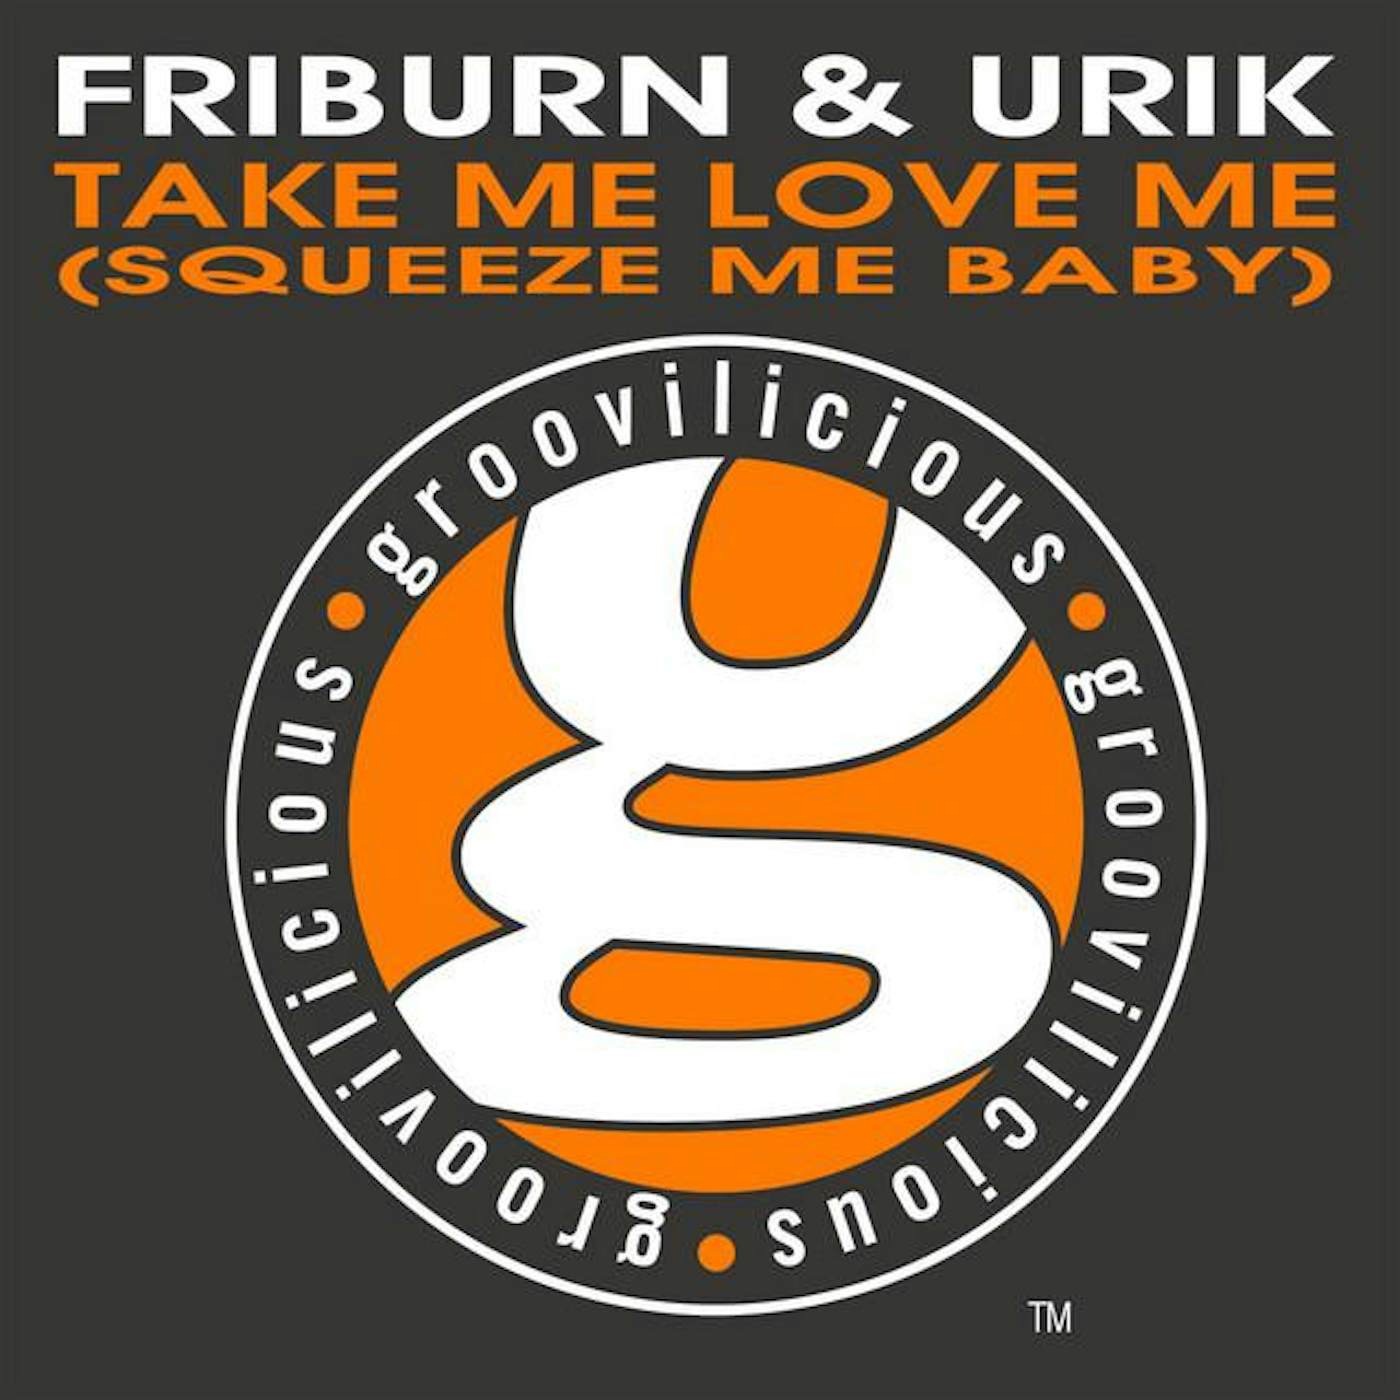 Friburn & Urik